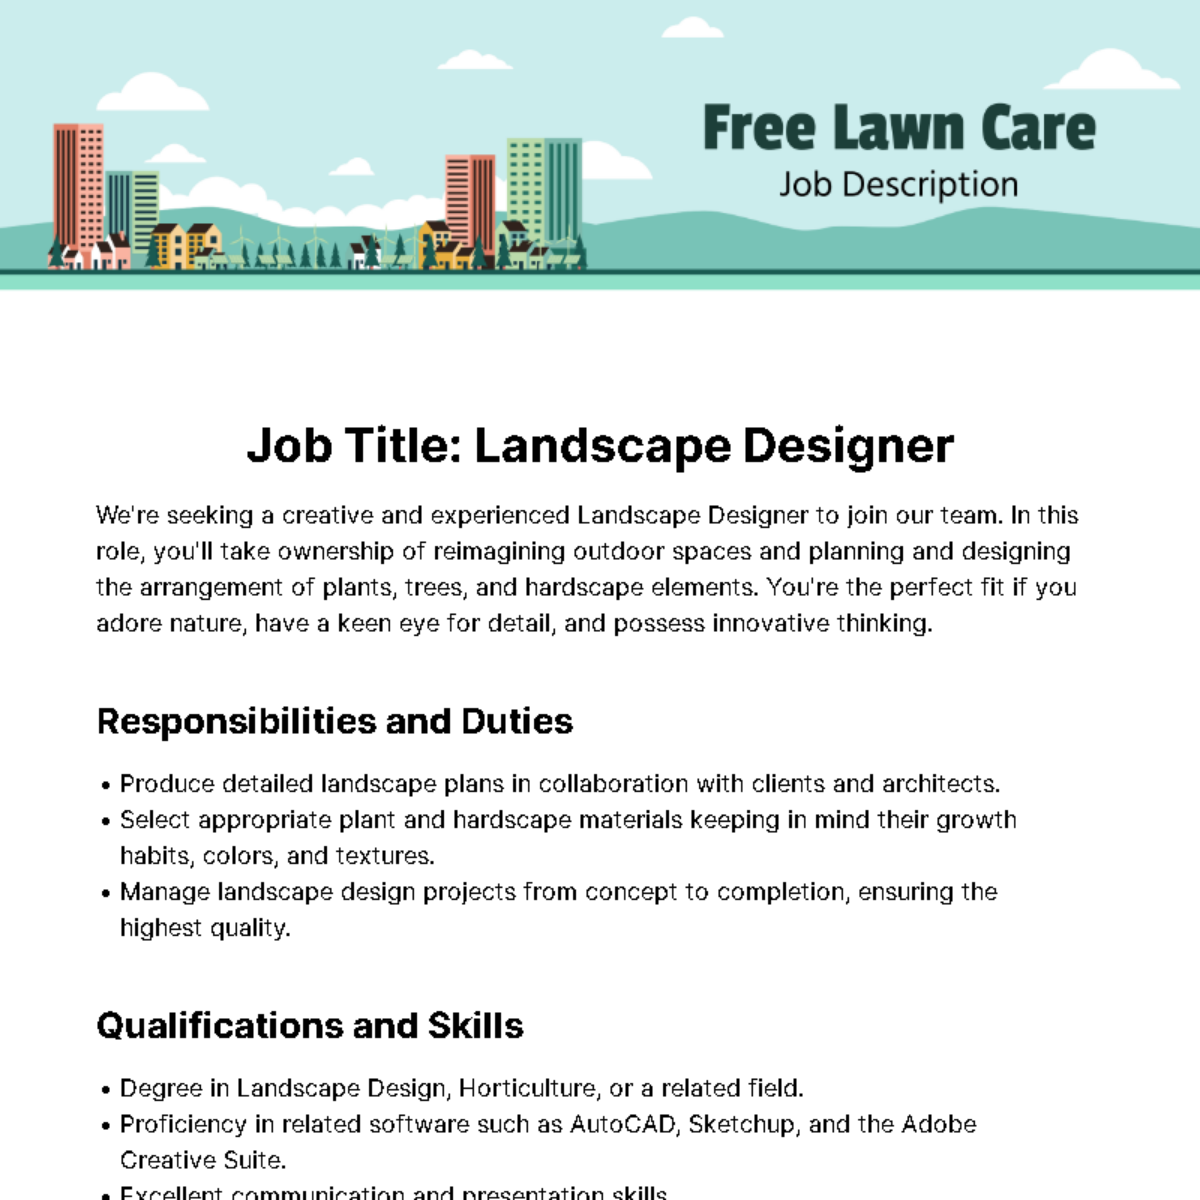 Free Lawn Care Job Description Template